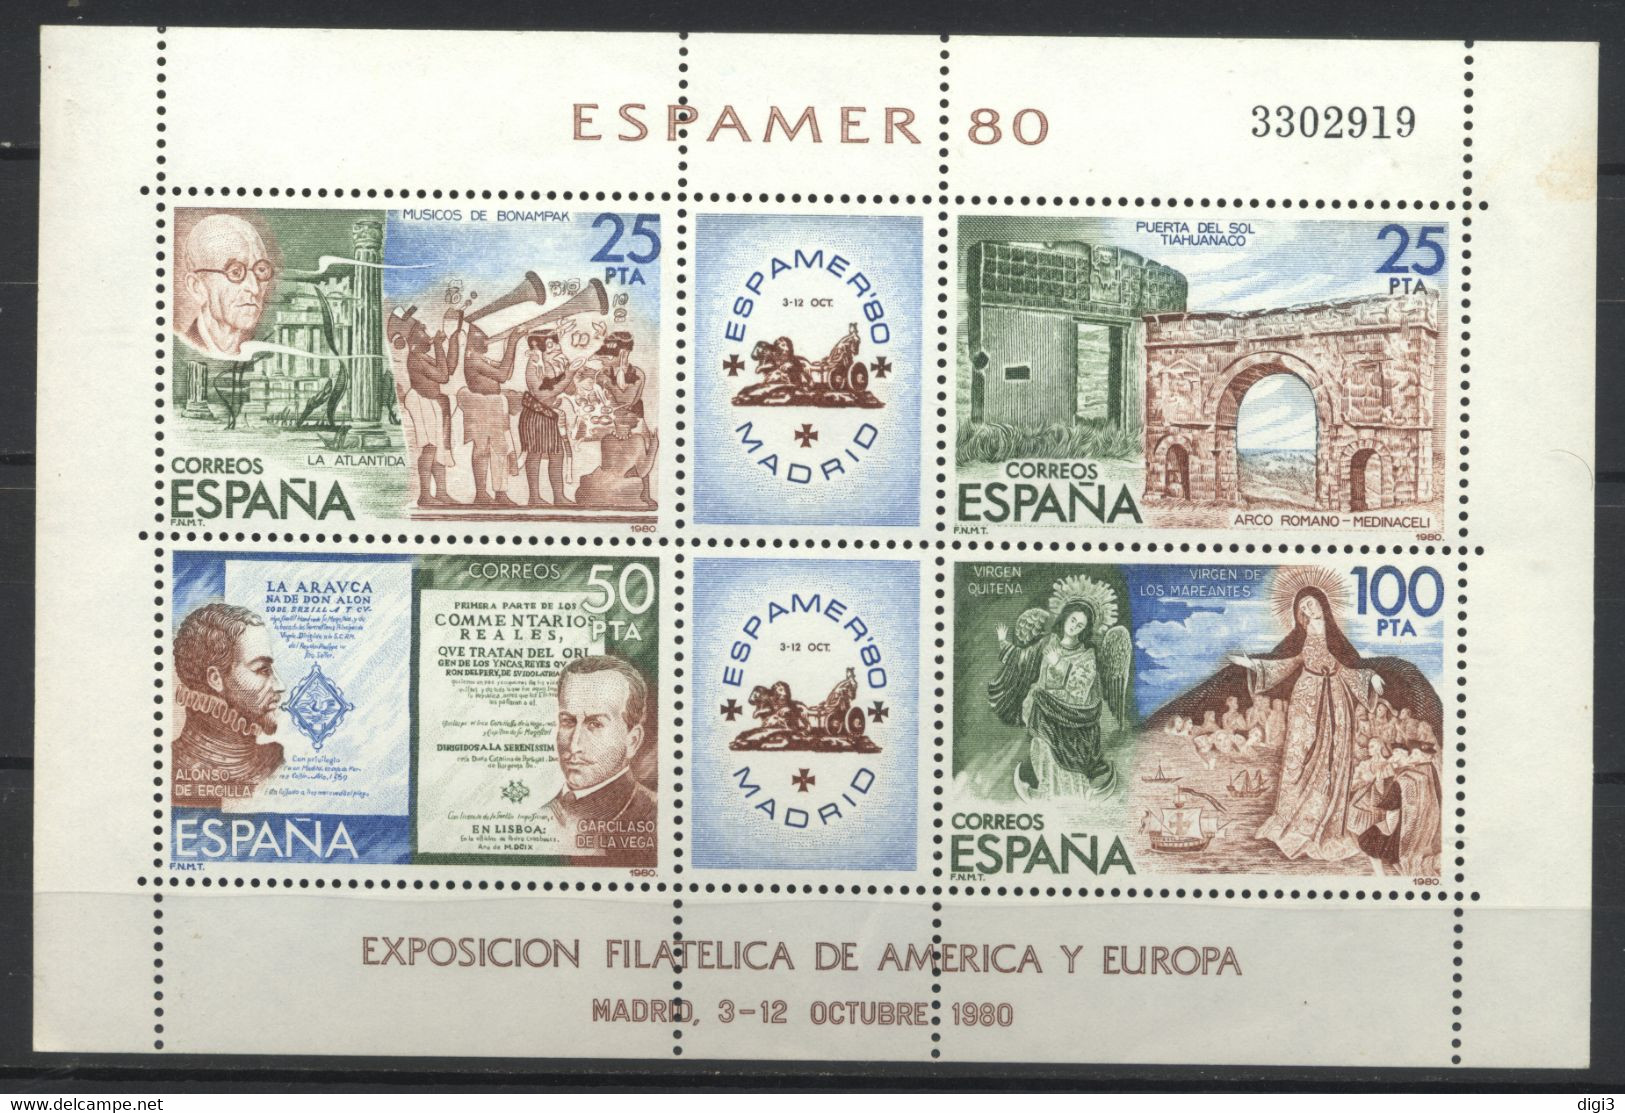 España, 1980, Exposiciòn Filatélica De América Y Europa, ESPAMER 80, Hojita, MNH** - Herdenkingsblaadjes